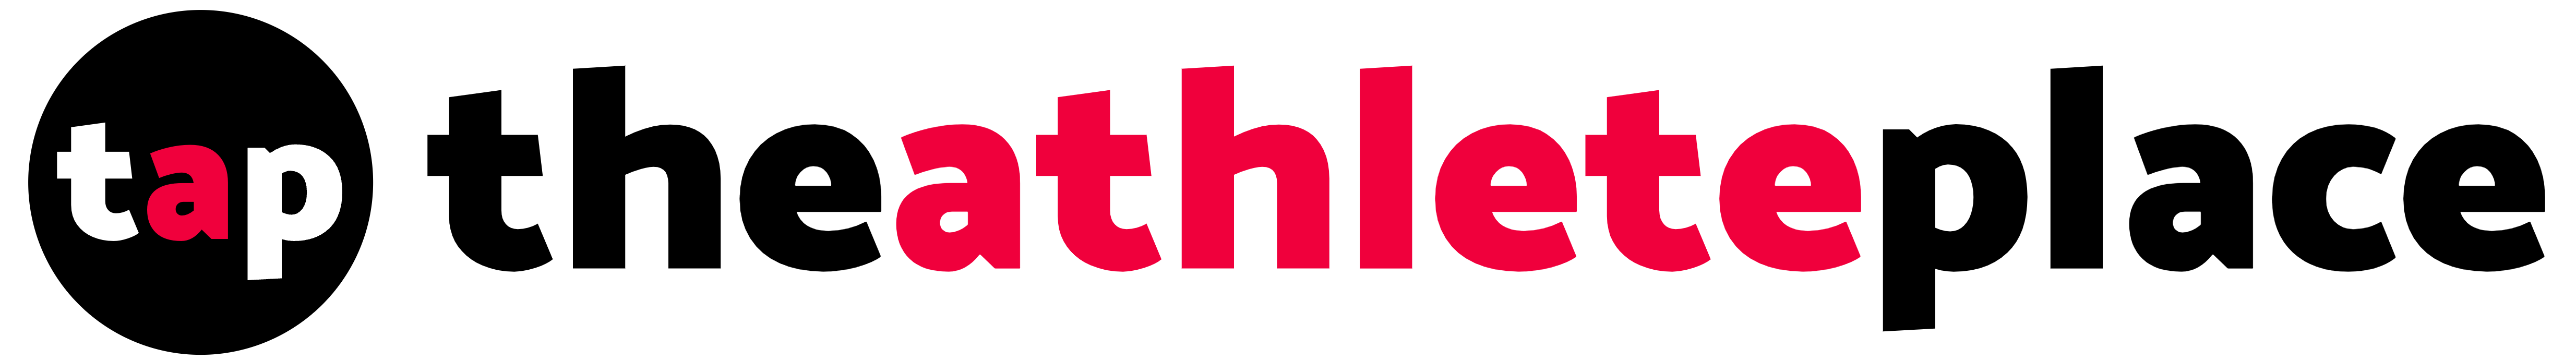 The Athlete Place logo